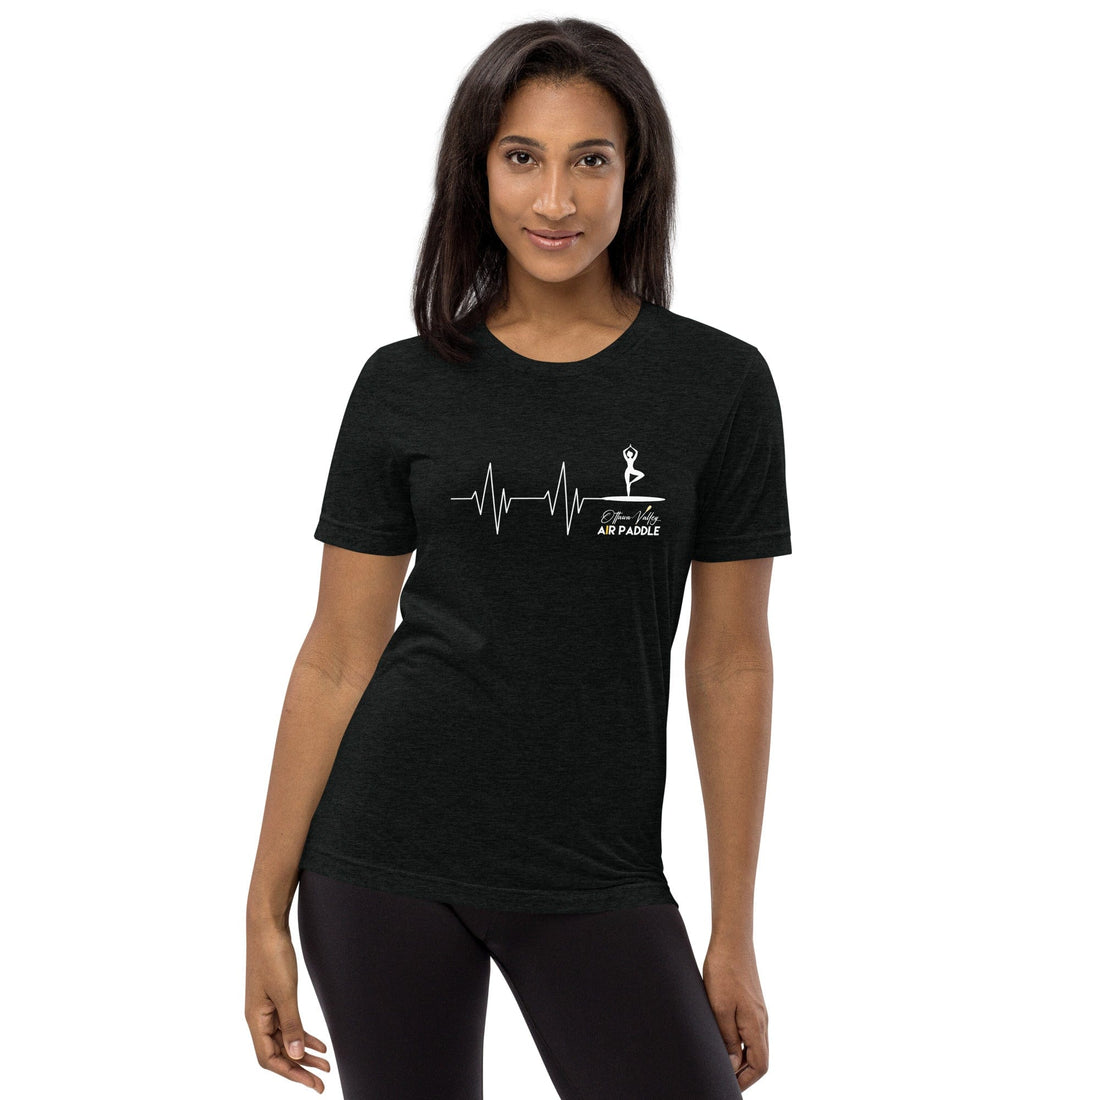 Ottawa Valley Air Paddle Solid Black Triblend / XS Heartbeat Yoga Women's T-Shirt